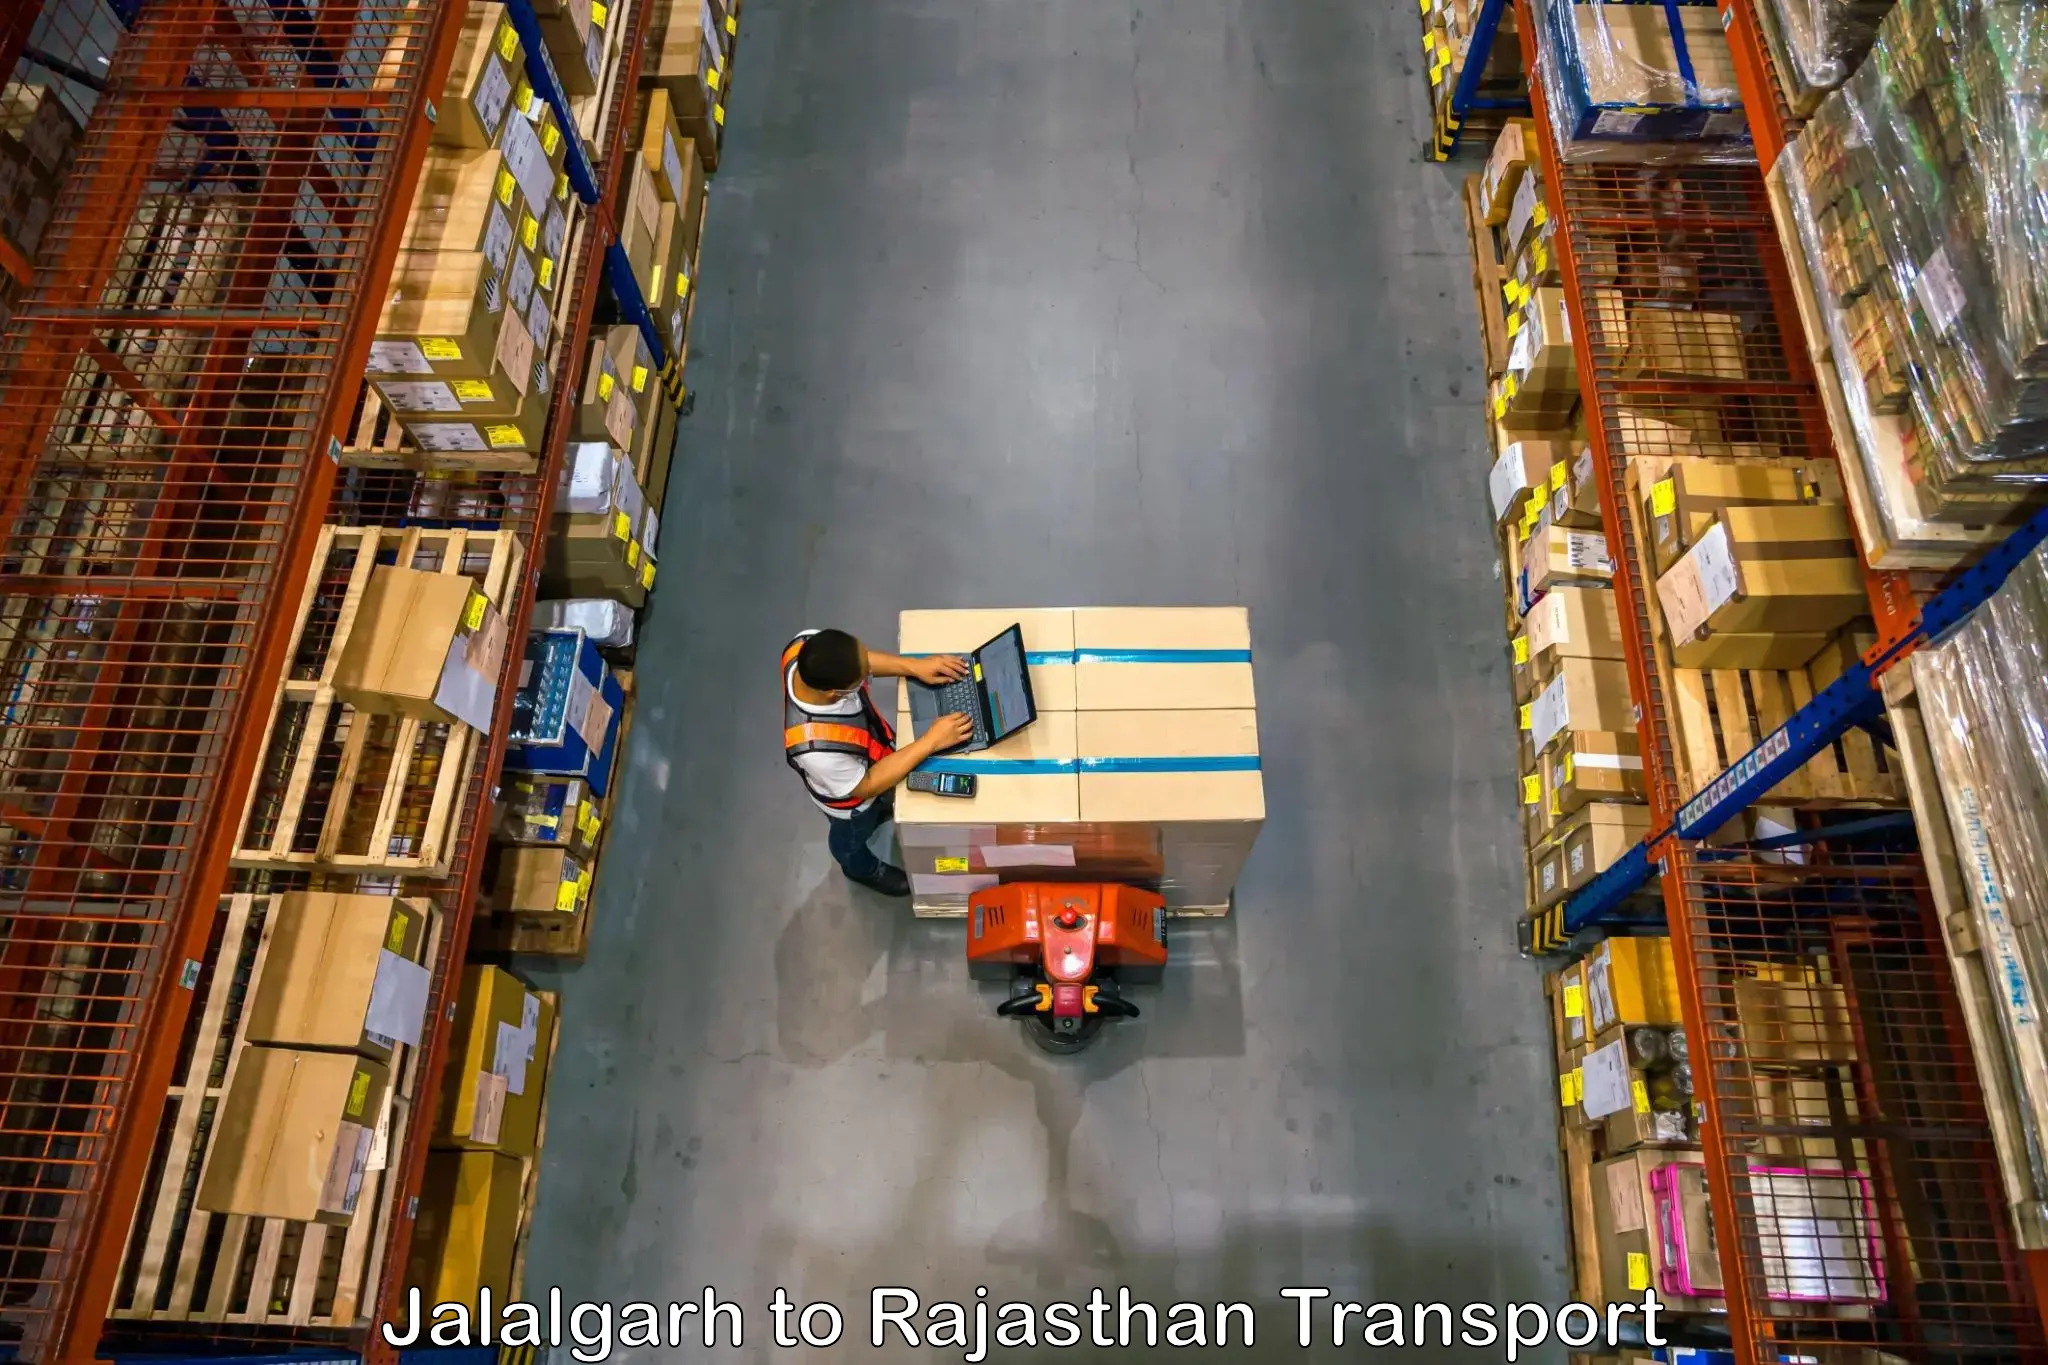 Truck transport companies in India Jalalgarh to Laxmangarh